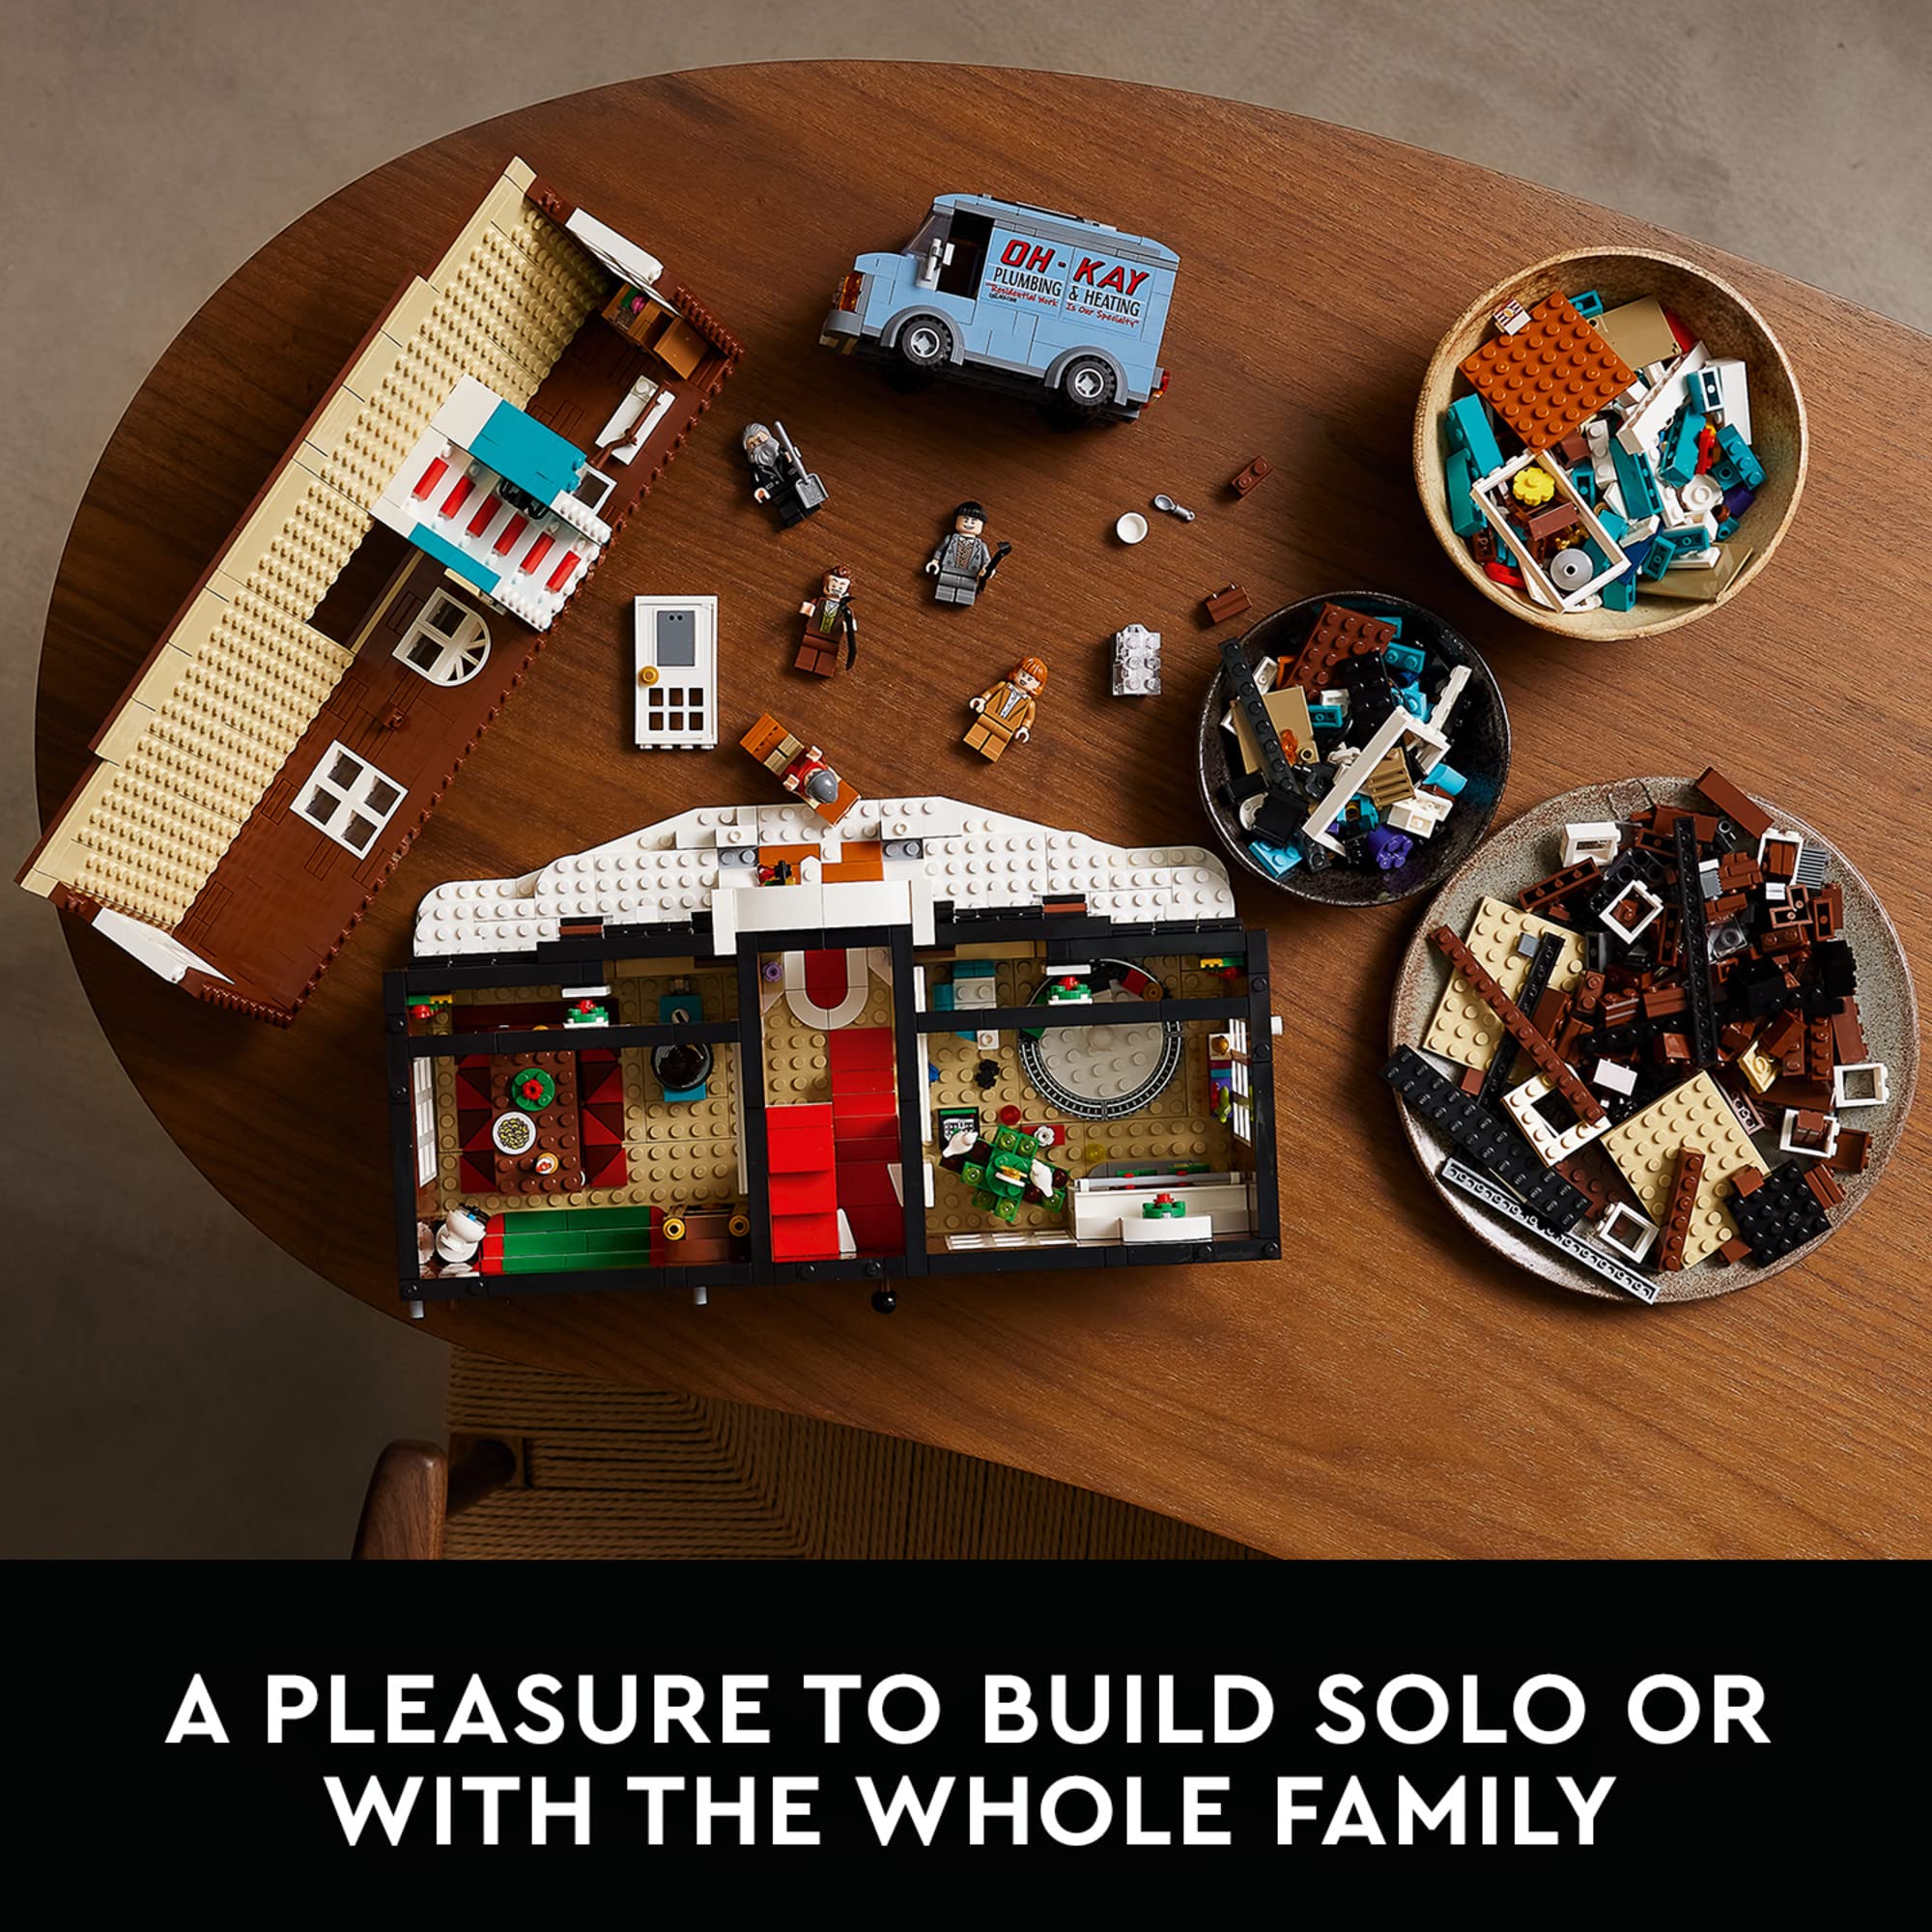 LEGO Ideas Home Alone 21330 Building Kit; Buildable Movie Memorabilia; Delightful Gift Idea for Millennials (3,955 Pieces)